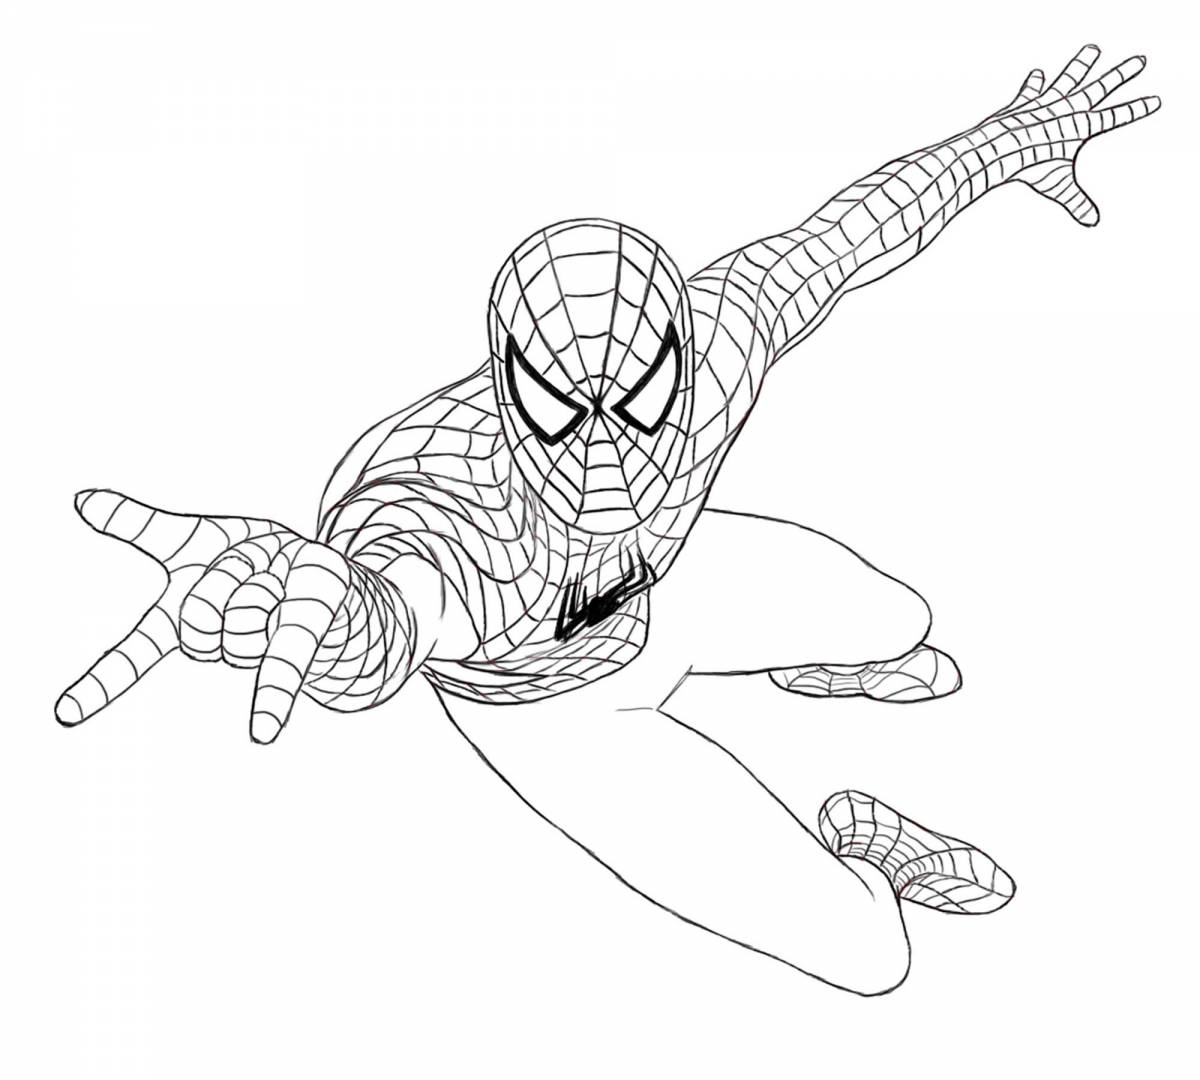 Fantastic drawing of spider-man